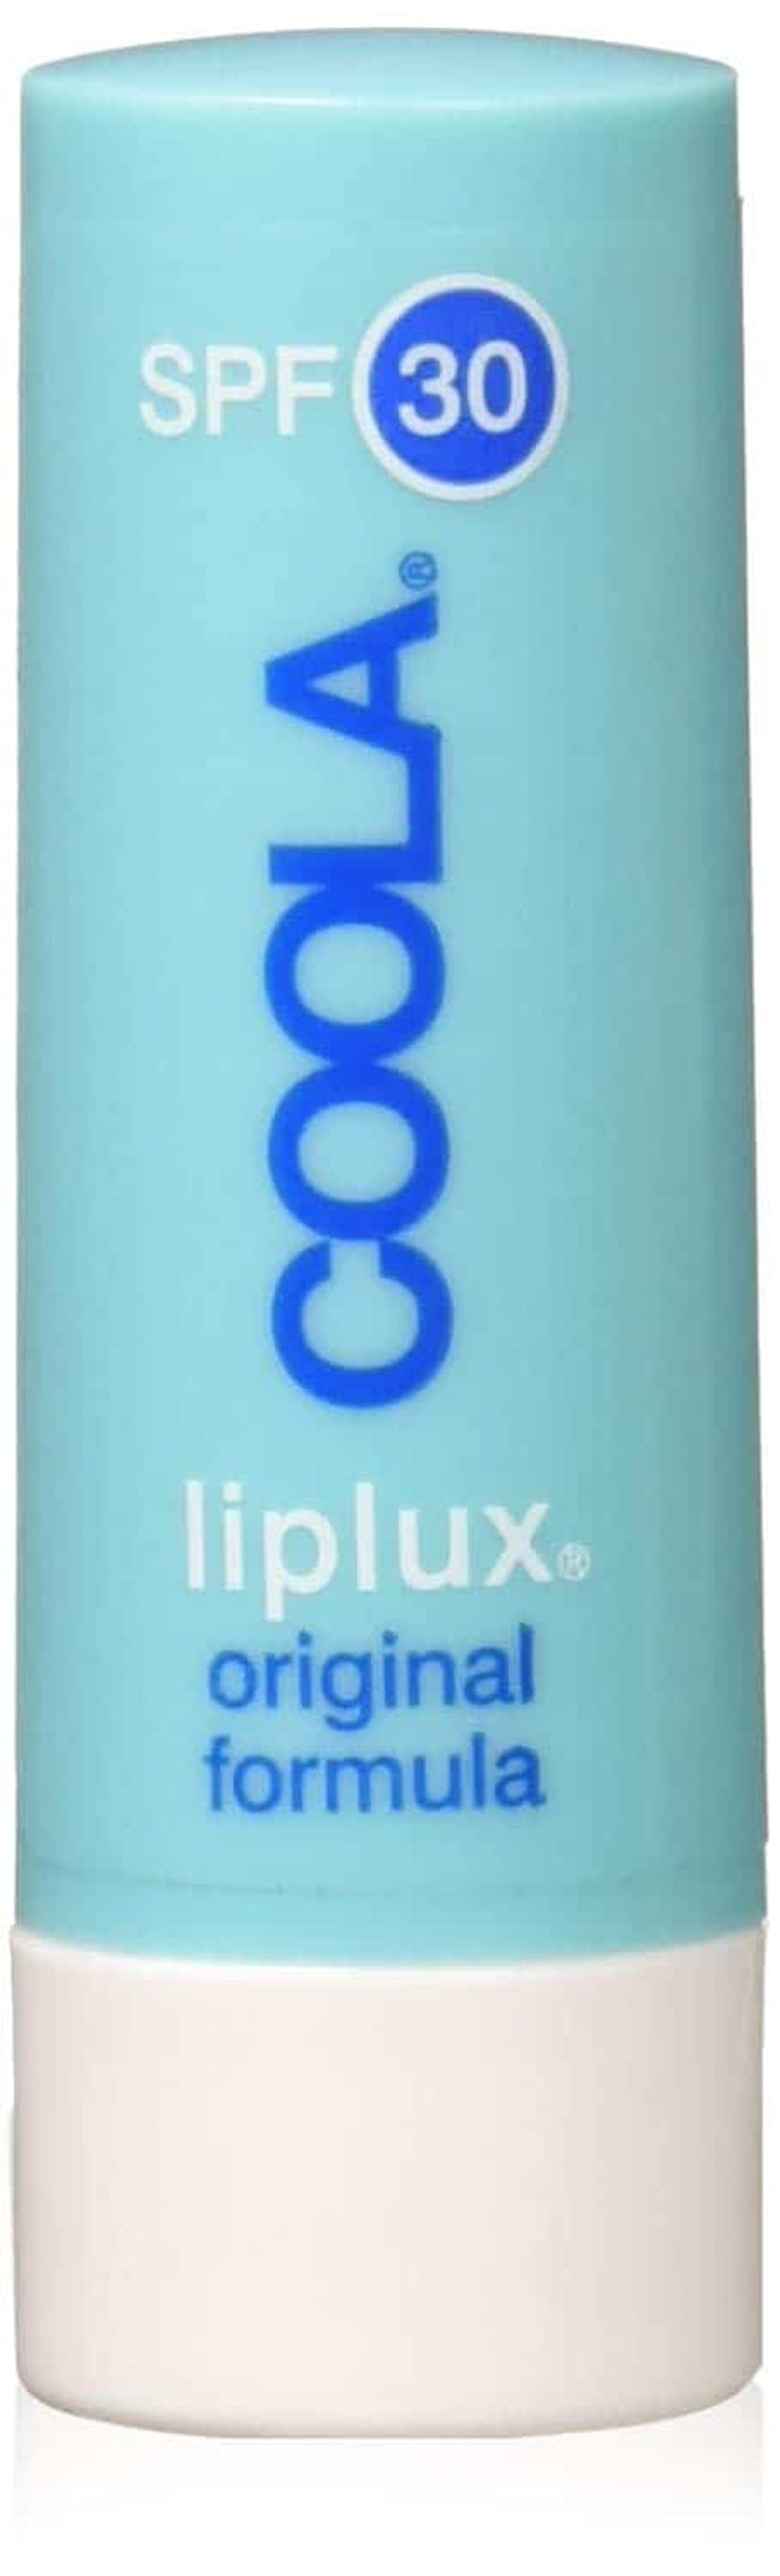 COOLA Organic Liplux Sport Original Formula Lip Balm Sunscreen 